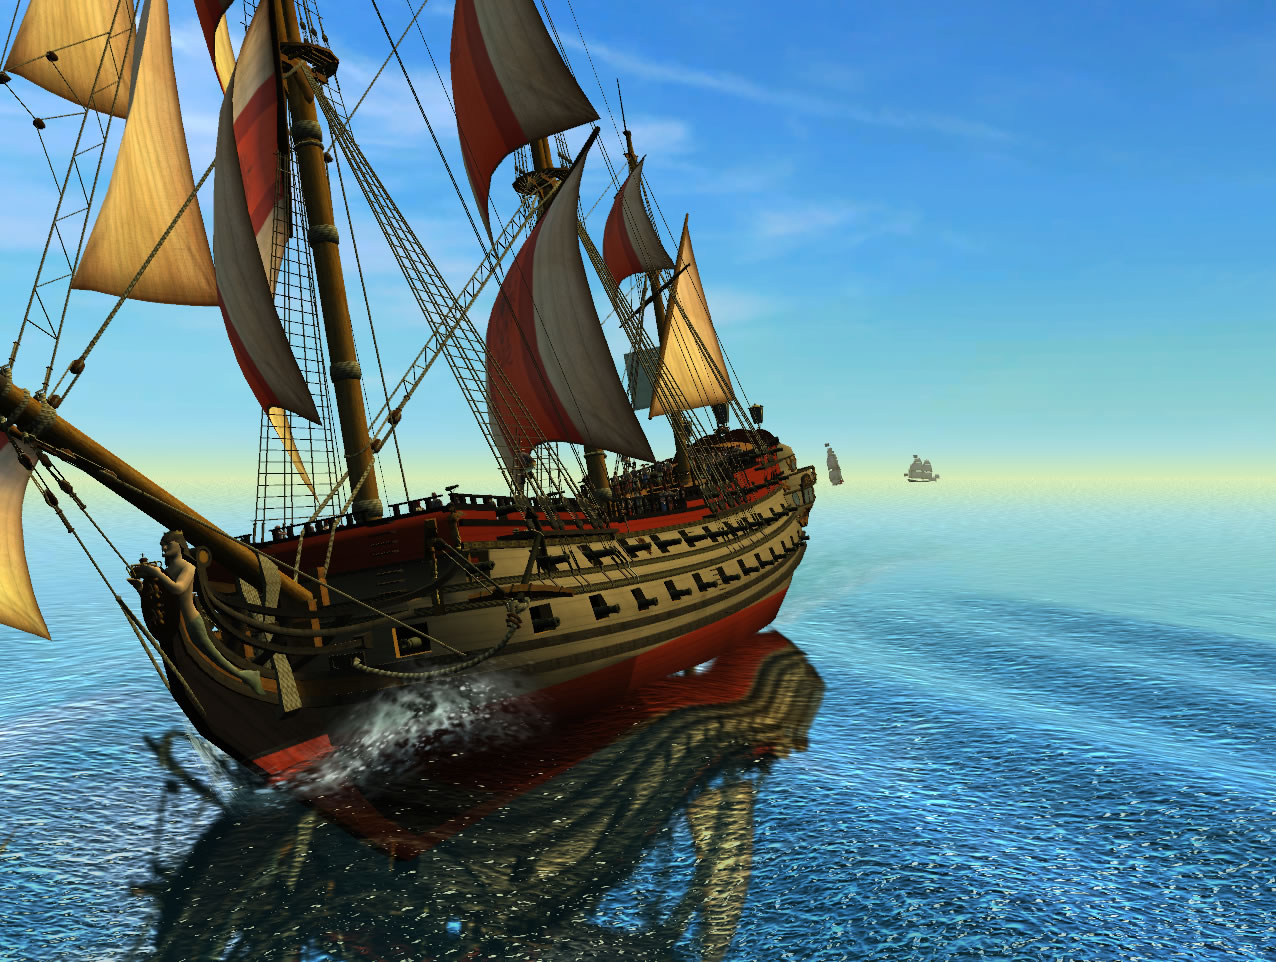 pirate boat games